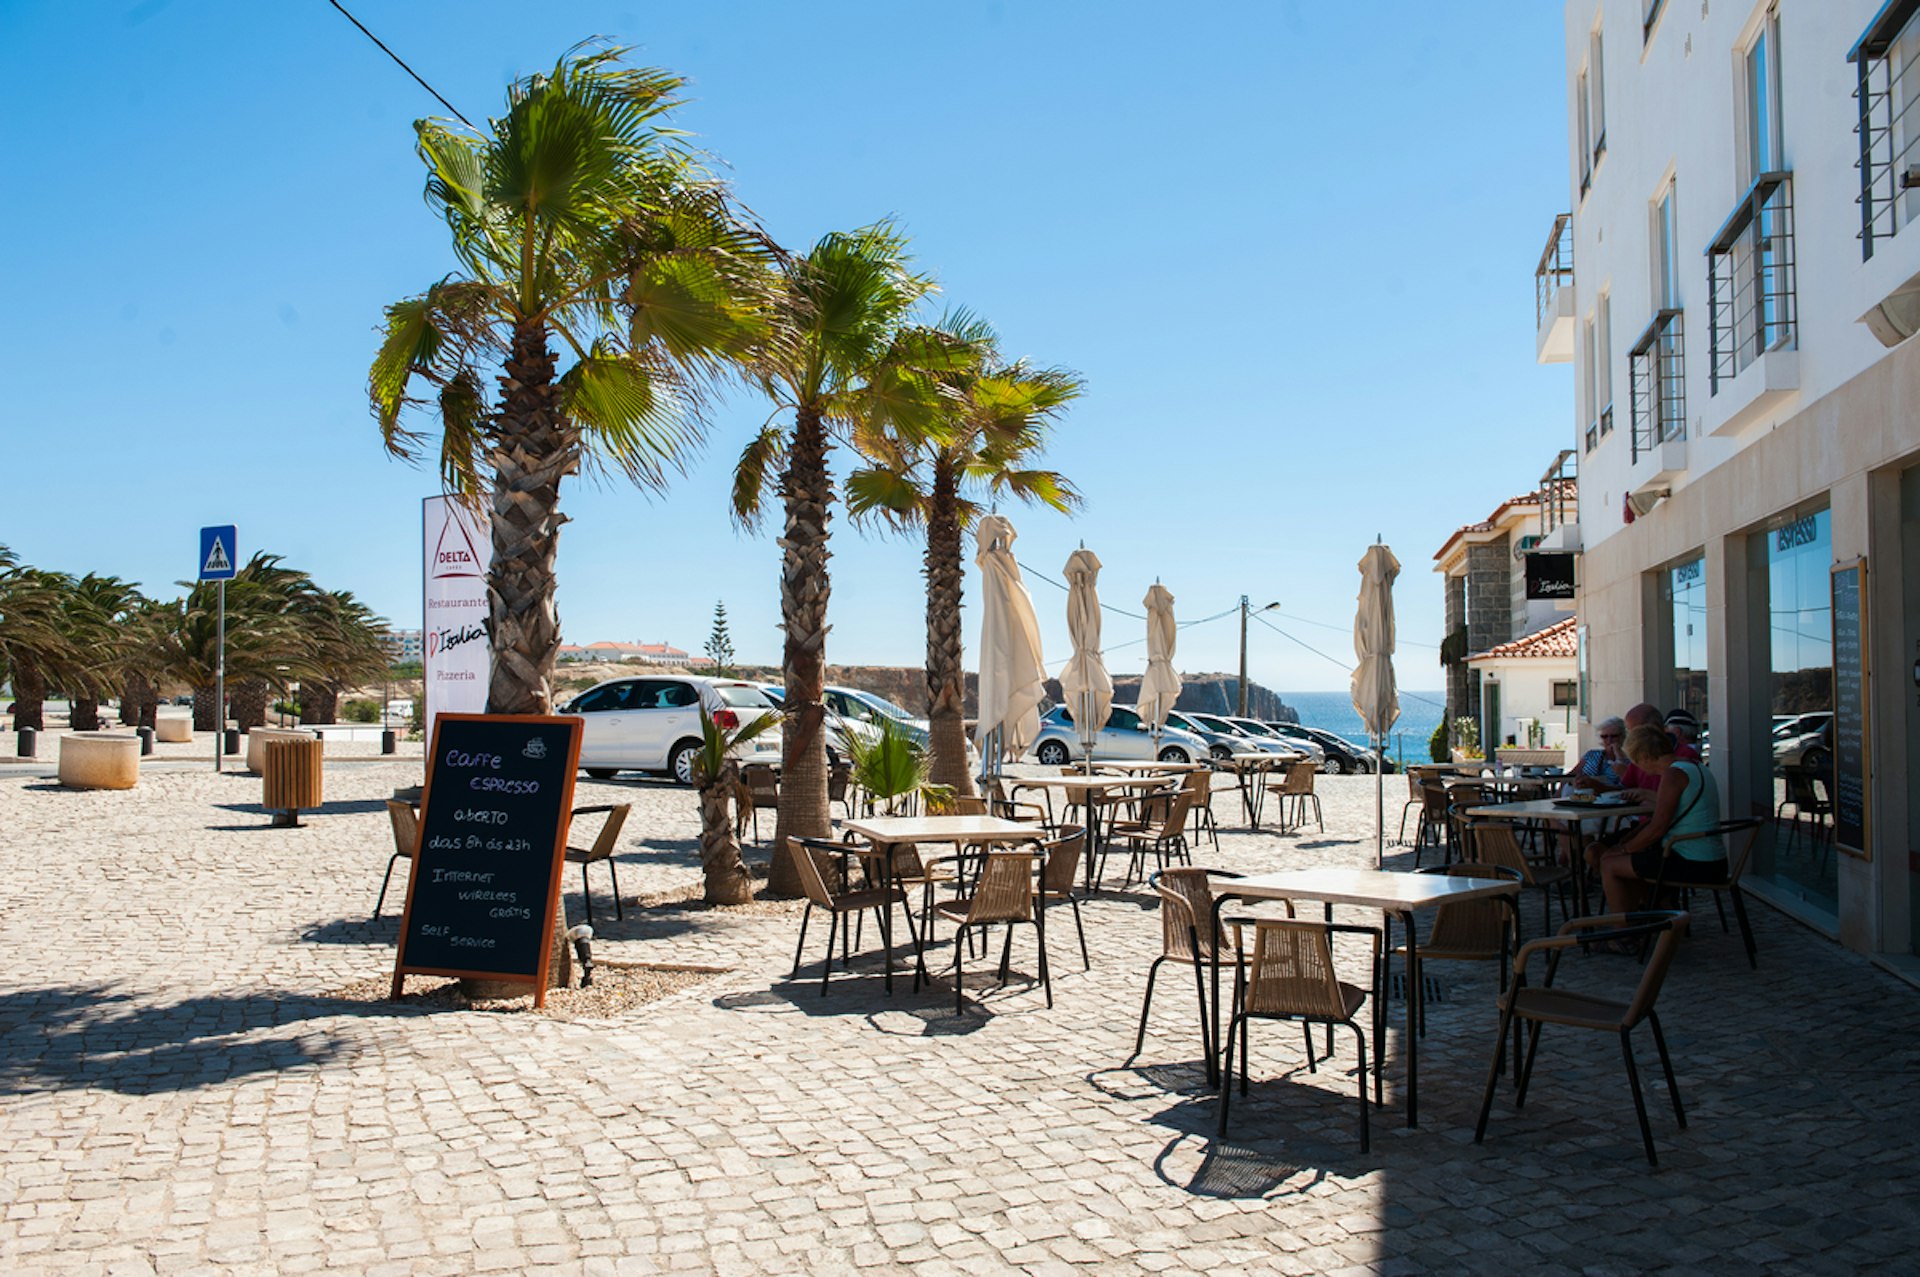 Seaside cafes in Sagres. Image by Lola Akinmade Åkerström / Lonely Planet